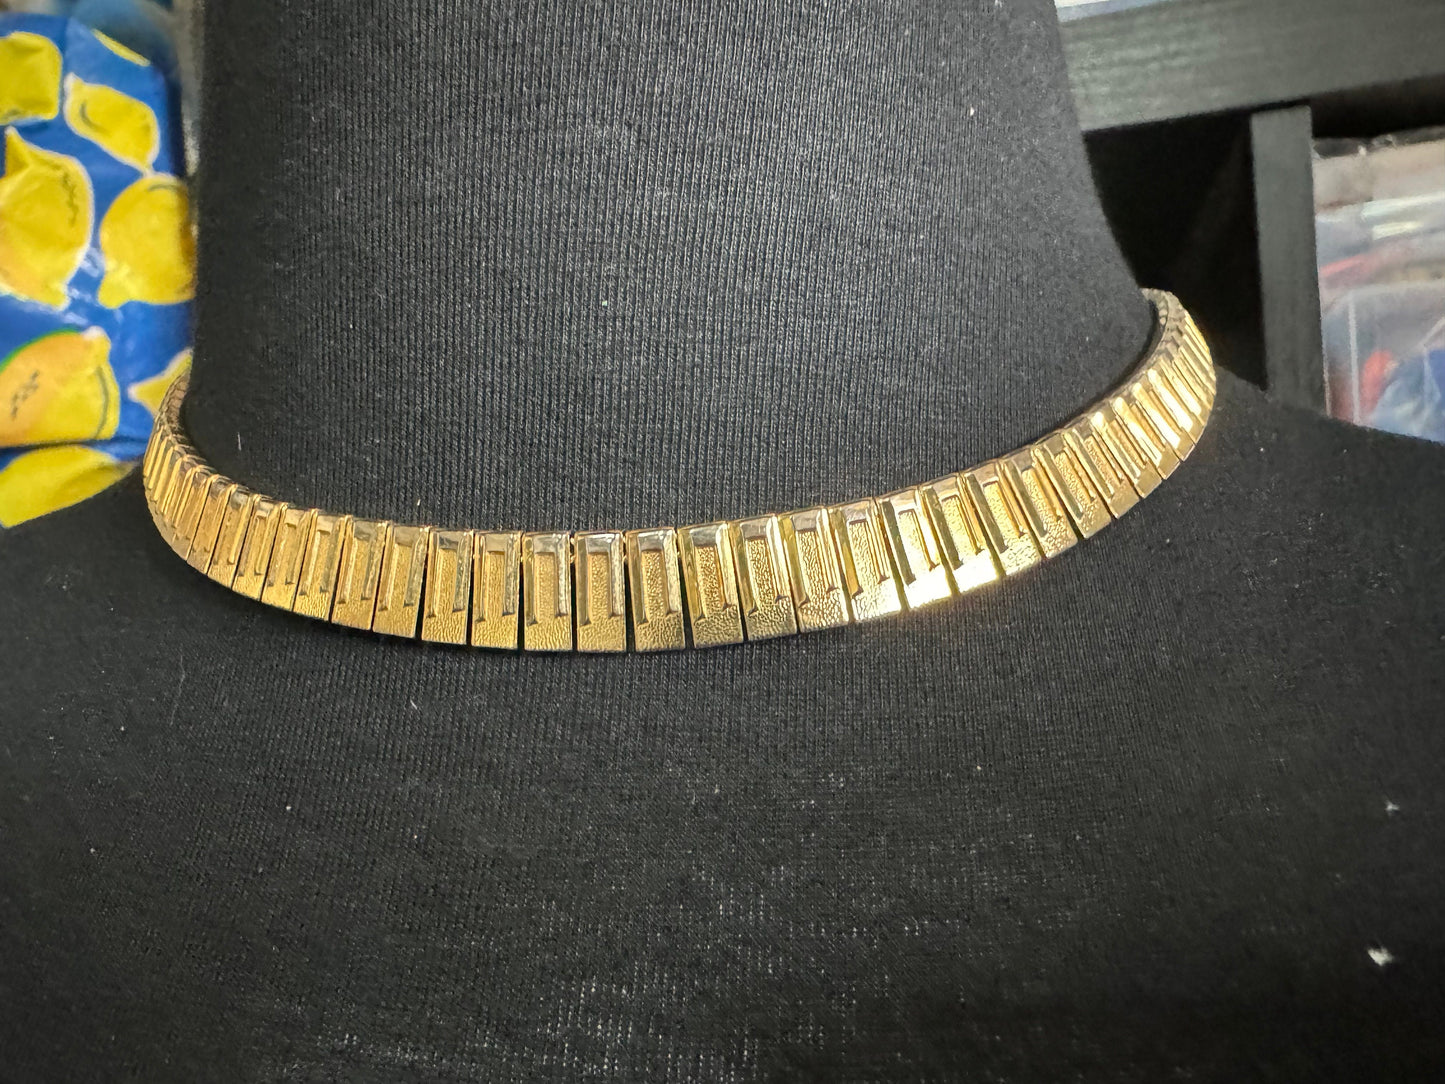 Vintage Egyptian Revival Cleopatra gold Played Necklace fringe Link Runway Statement Choker